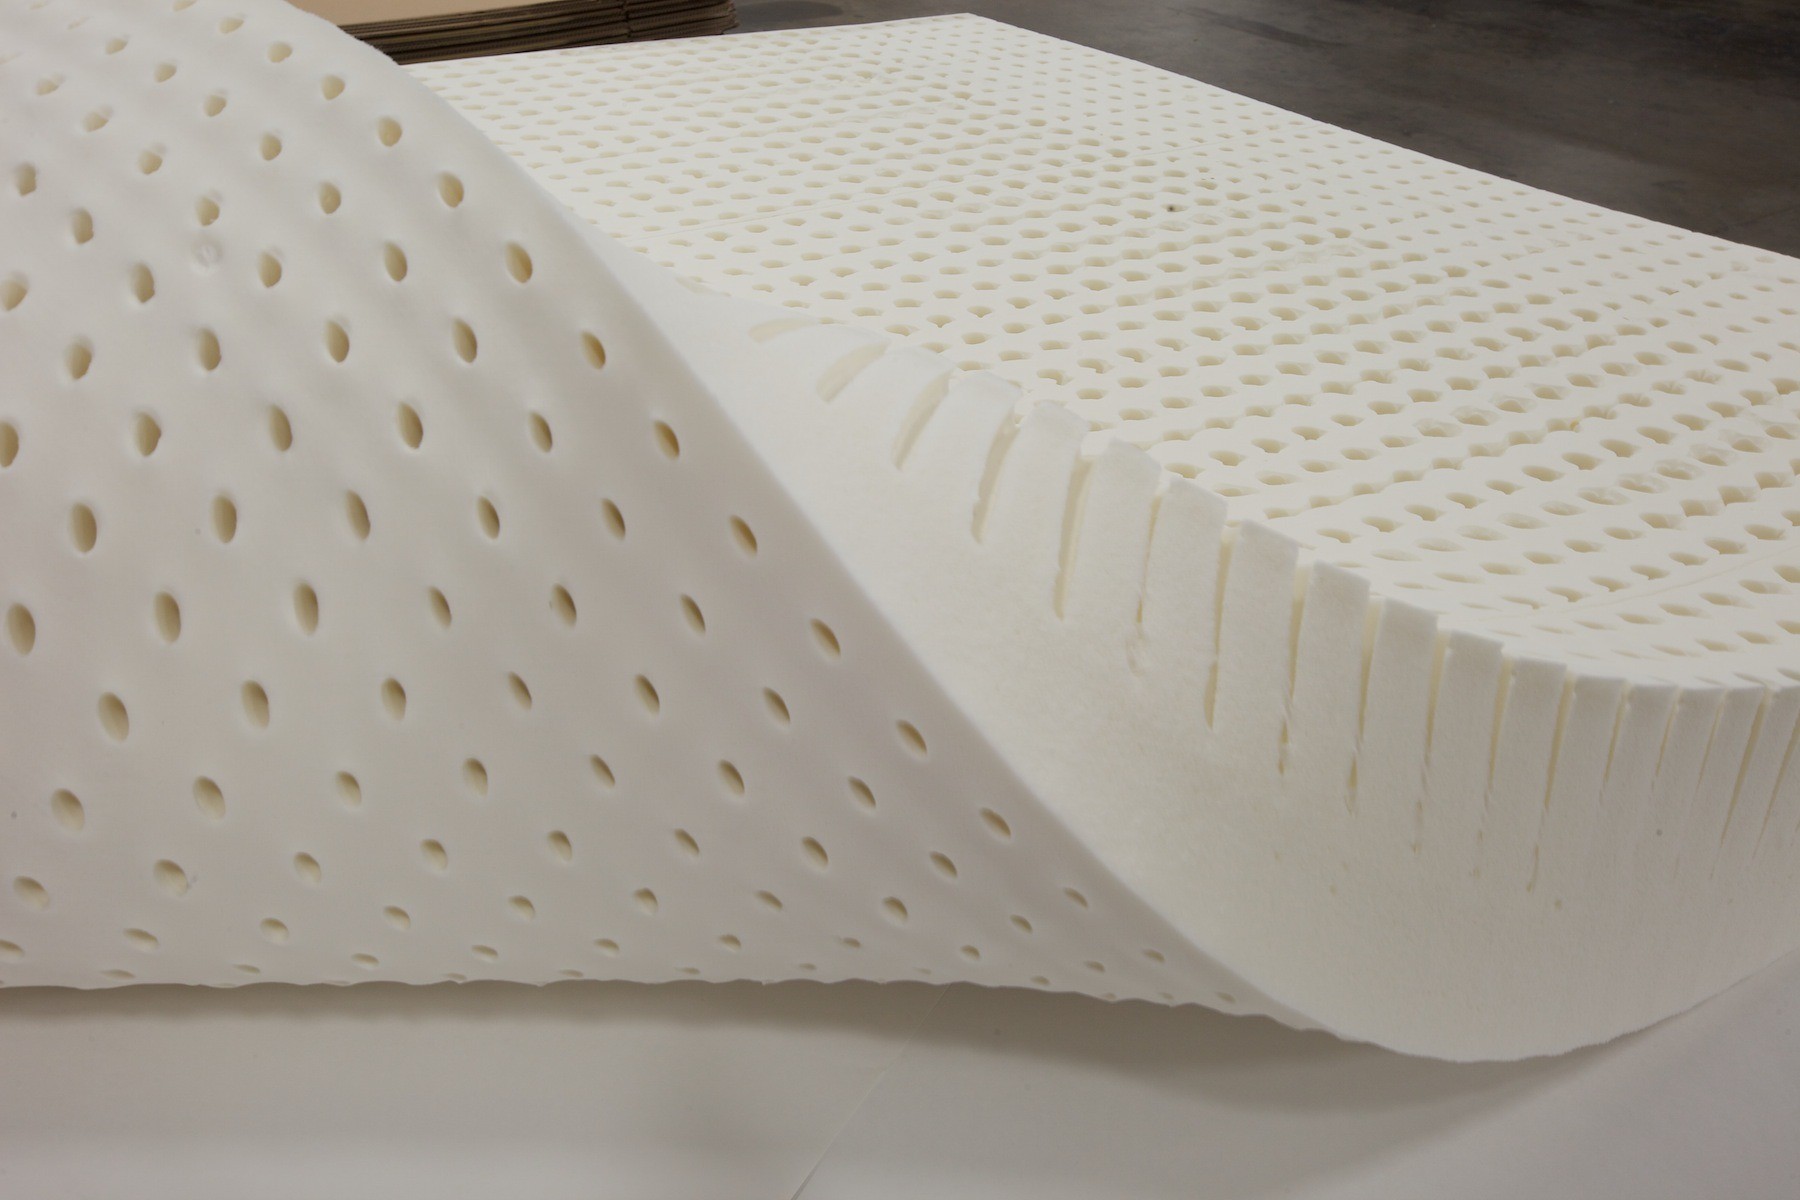 foam density for plush latex mattress